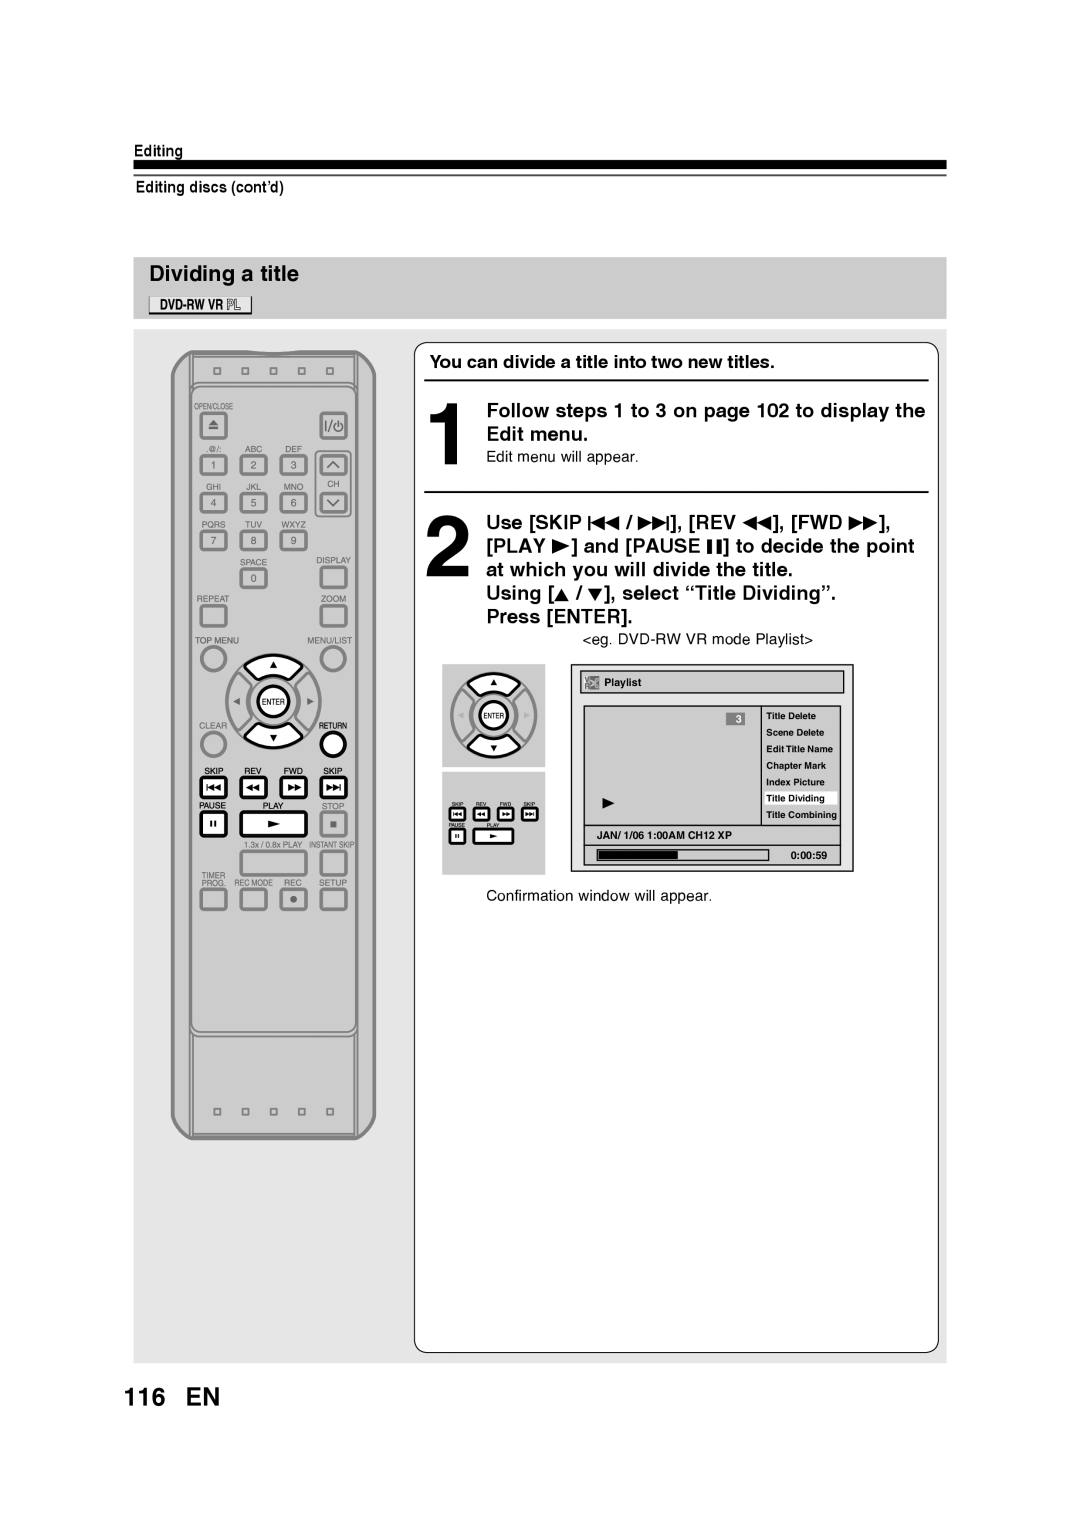 Toshiba D-RW2SU/D-RW2SC manual 116 EN, Dividing a title, Using K / L, select “Title Dividing” Press ENTER 